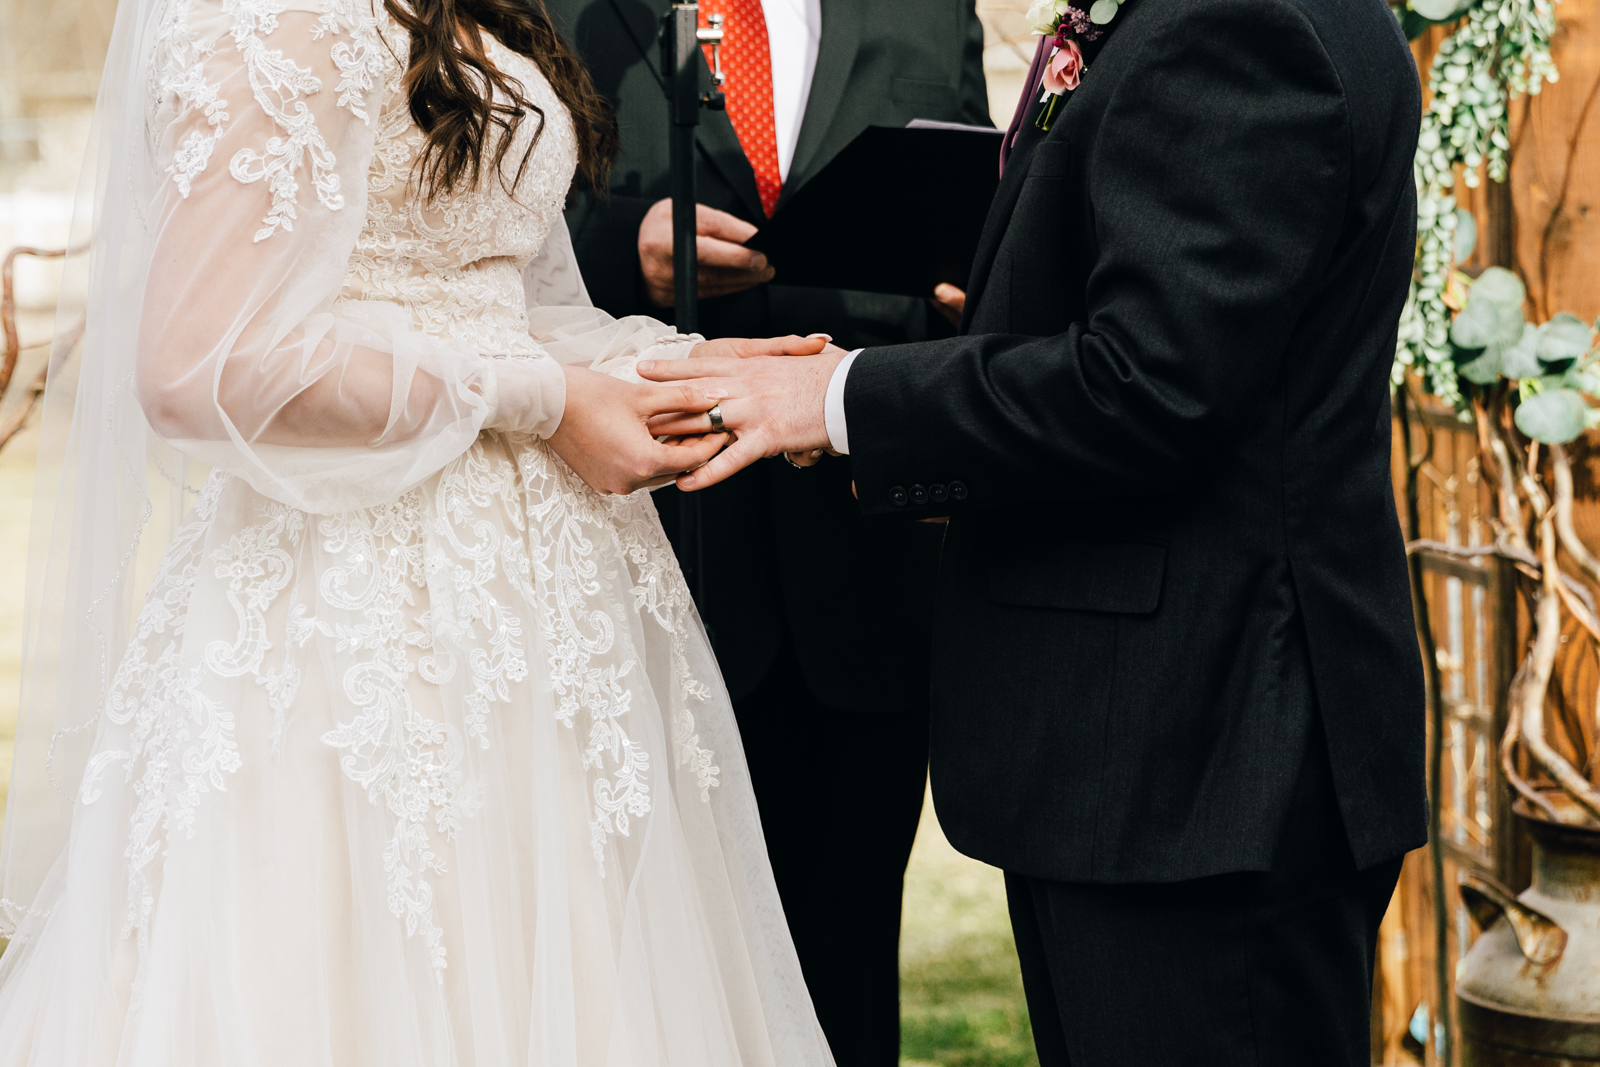 Jackson Hole wedding photographer capturesbride slides grooms ring on